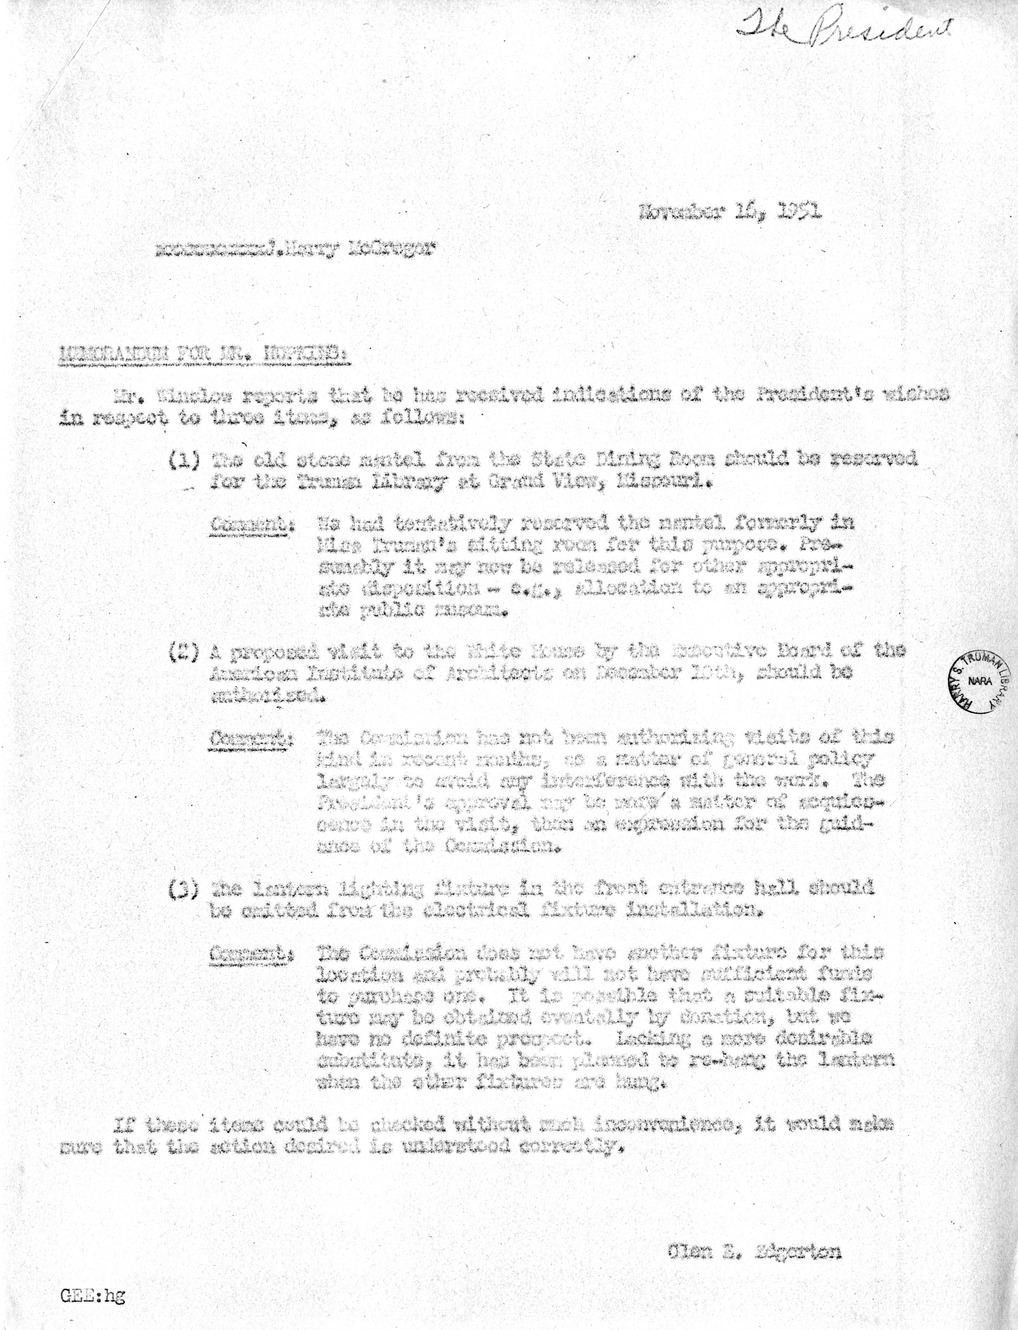 Memorandum from Major General Glen E. Edgerton to William Hopkins